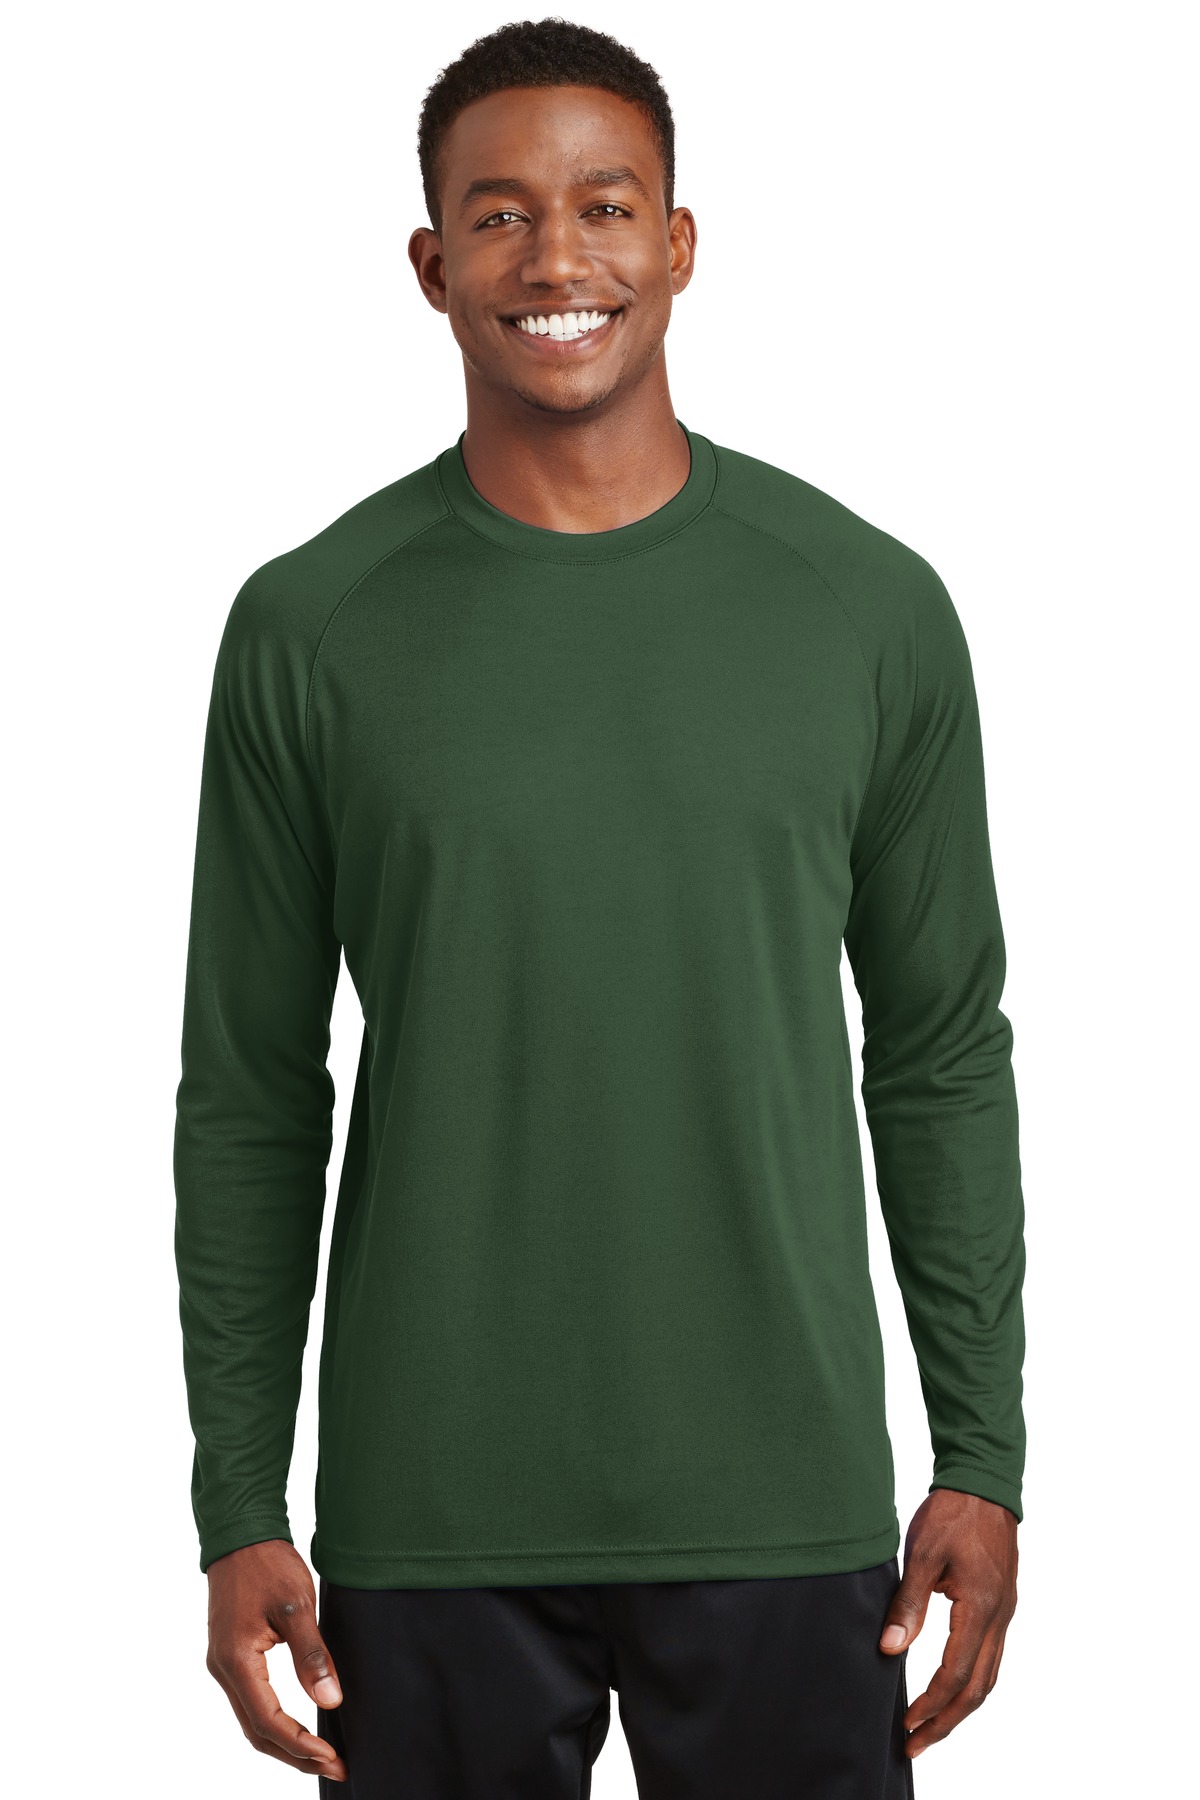 forest green dri fit shirt